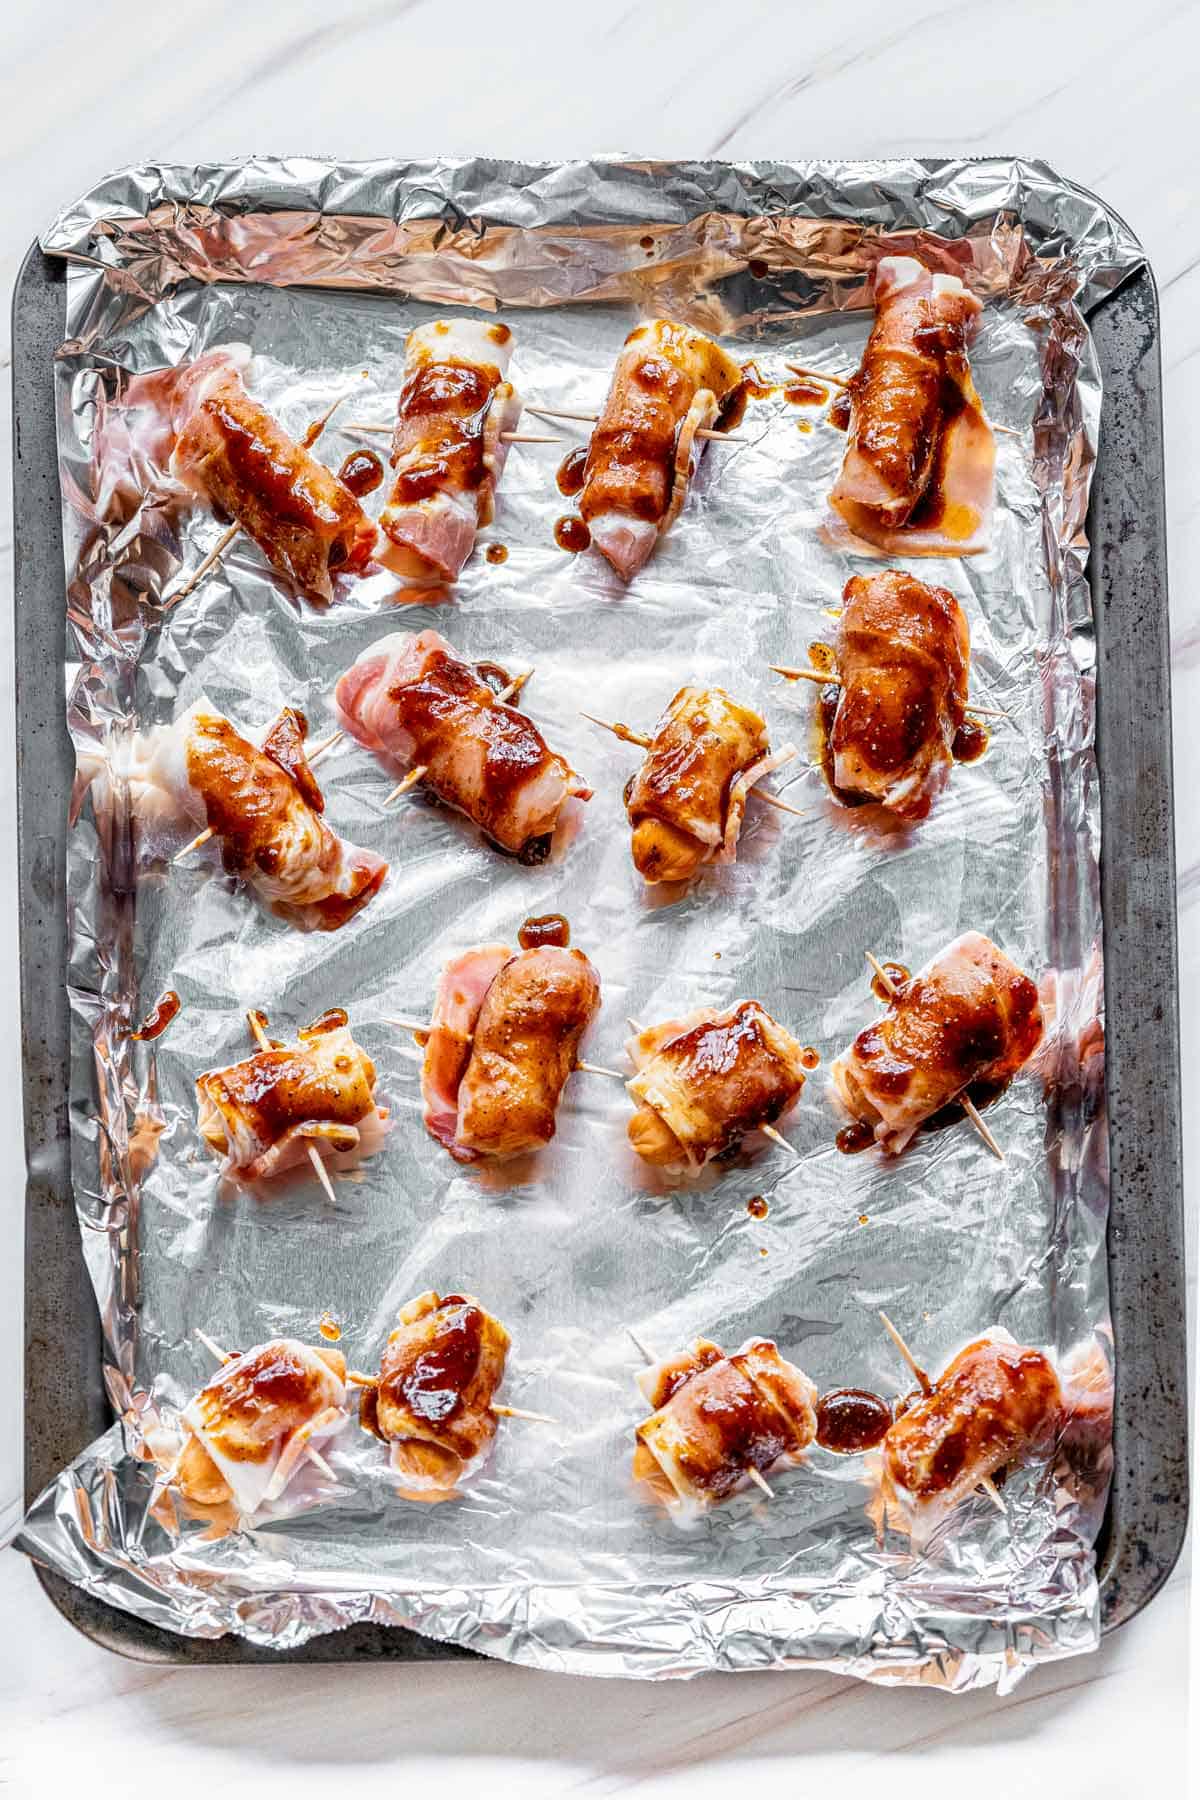 bacon wrapped lil smokies on baking sheet.